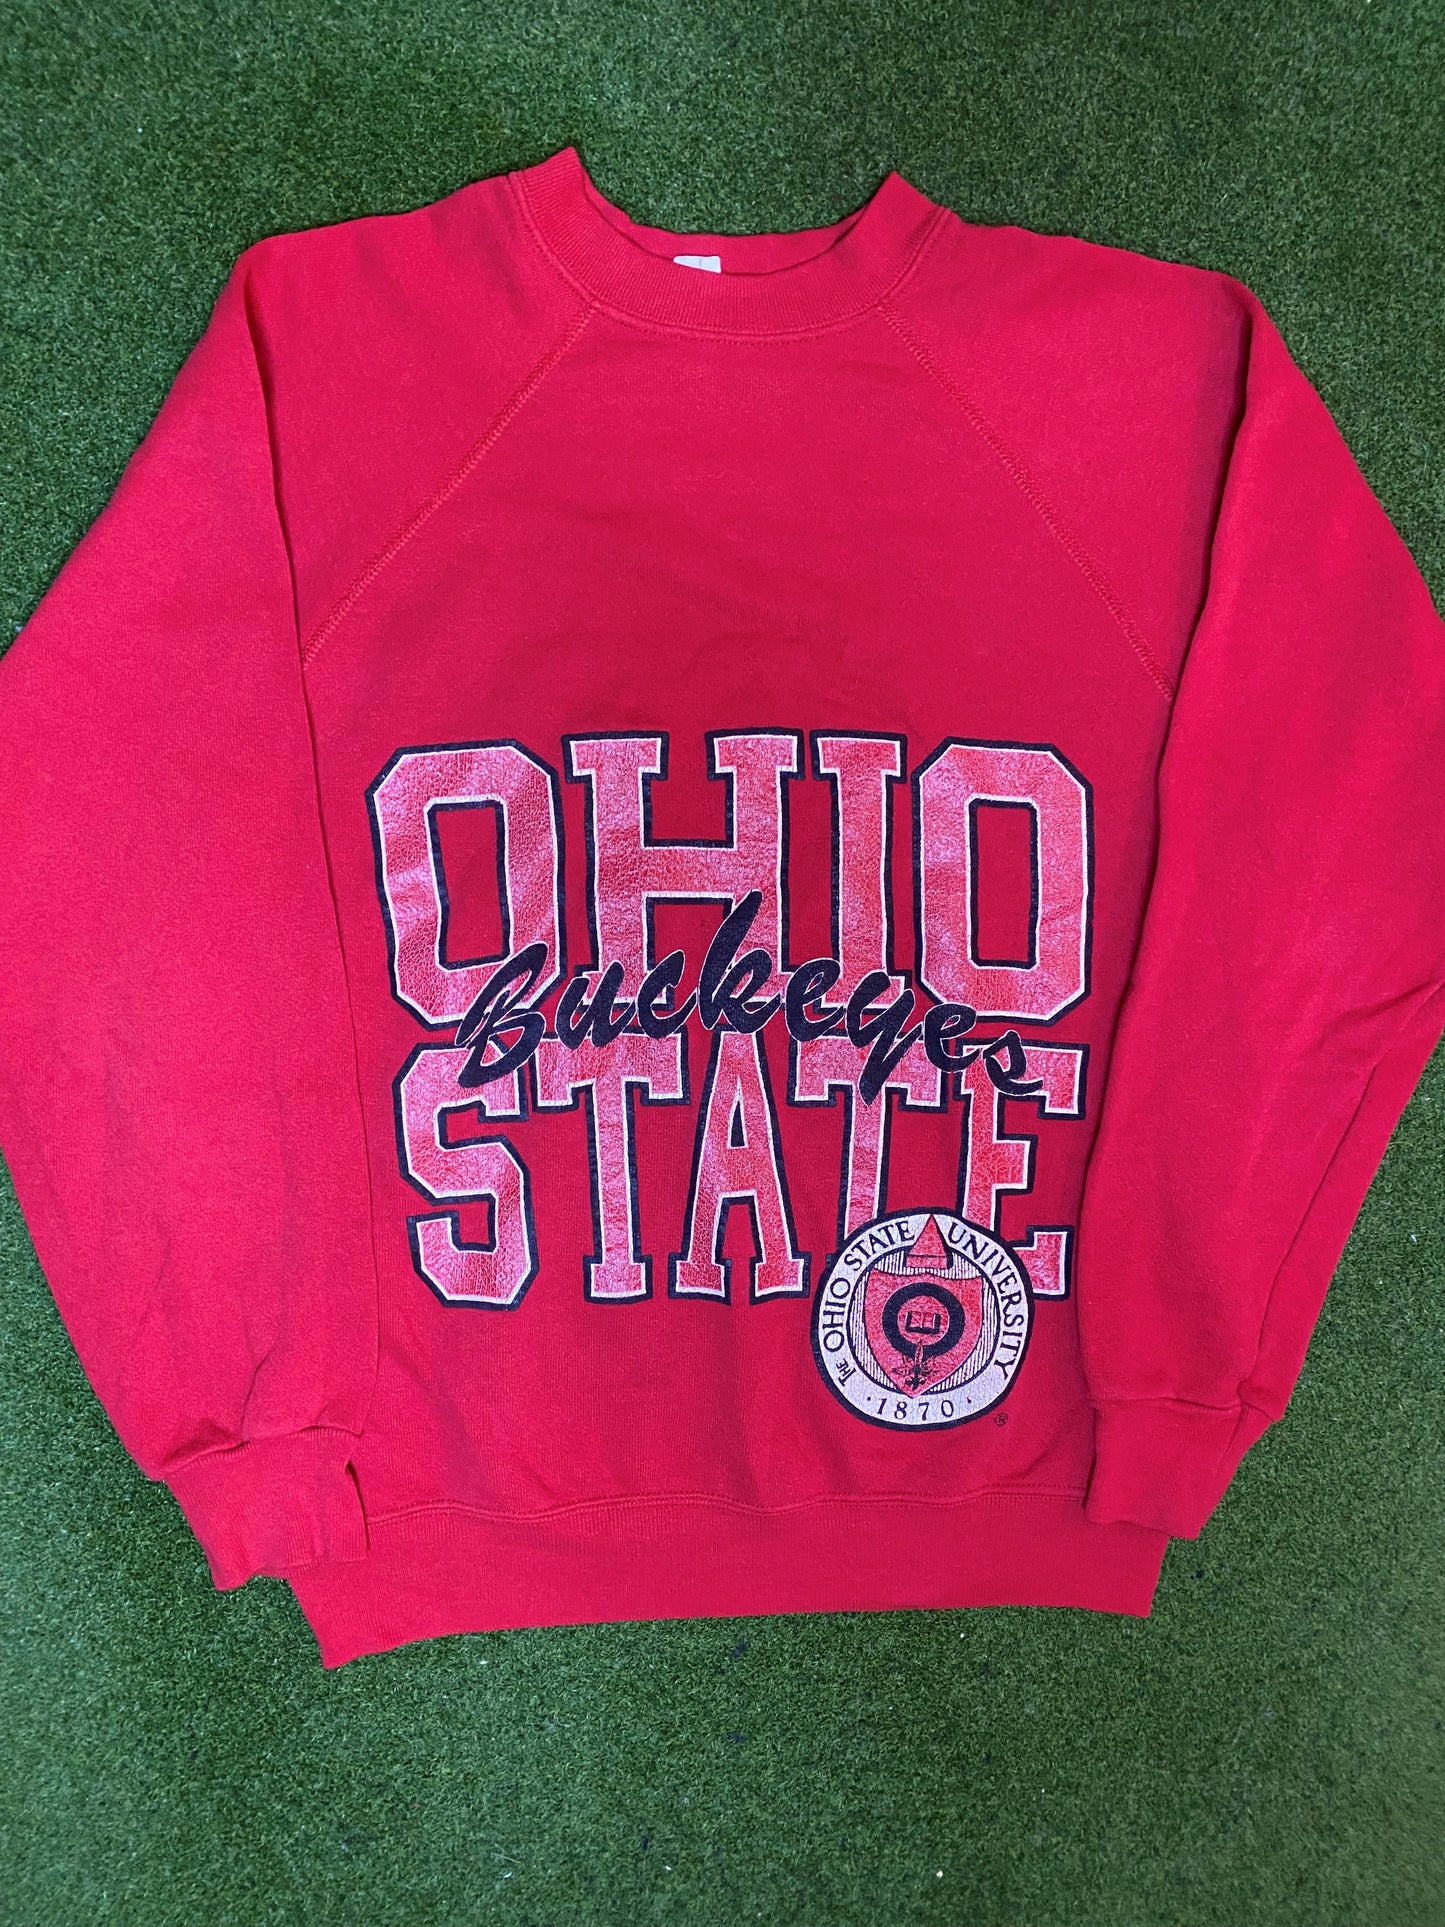 80s Ohio State Buckeyes - Vintage College Sweatshirt (Small)